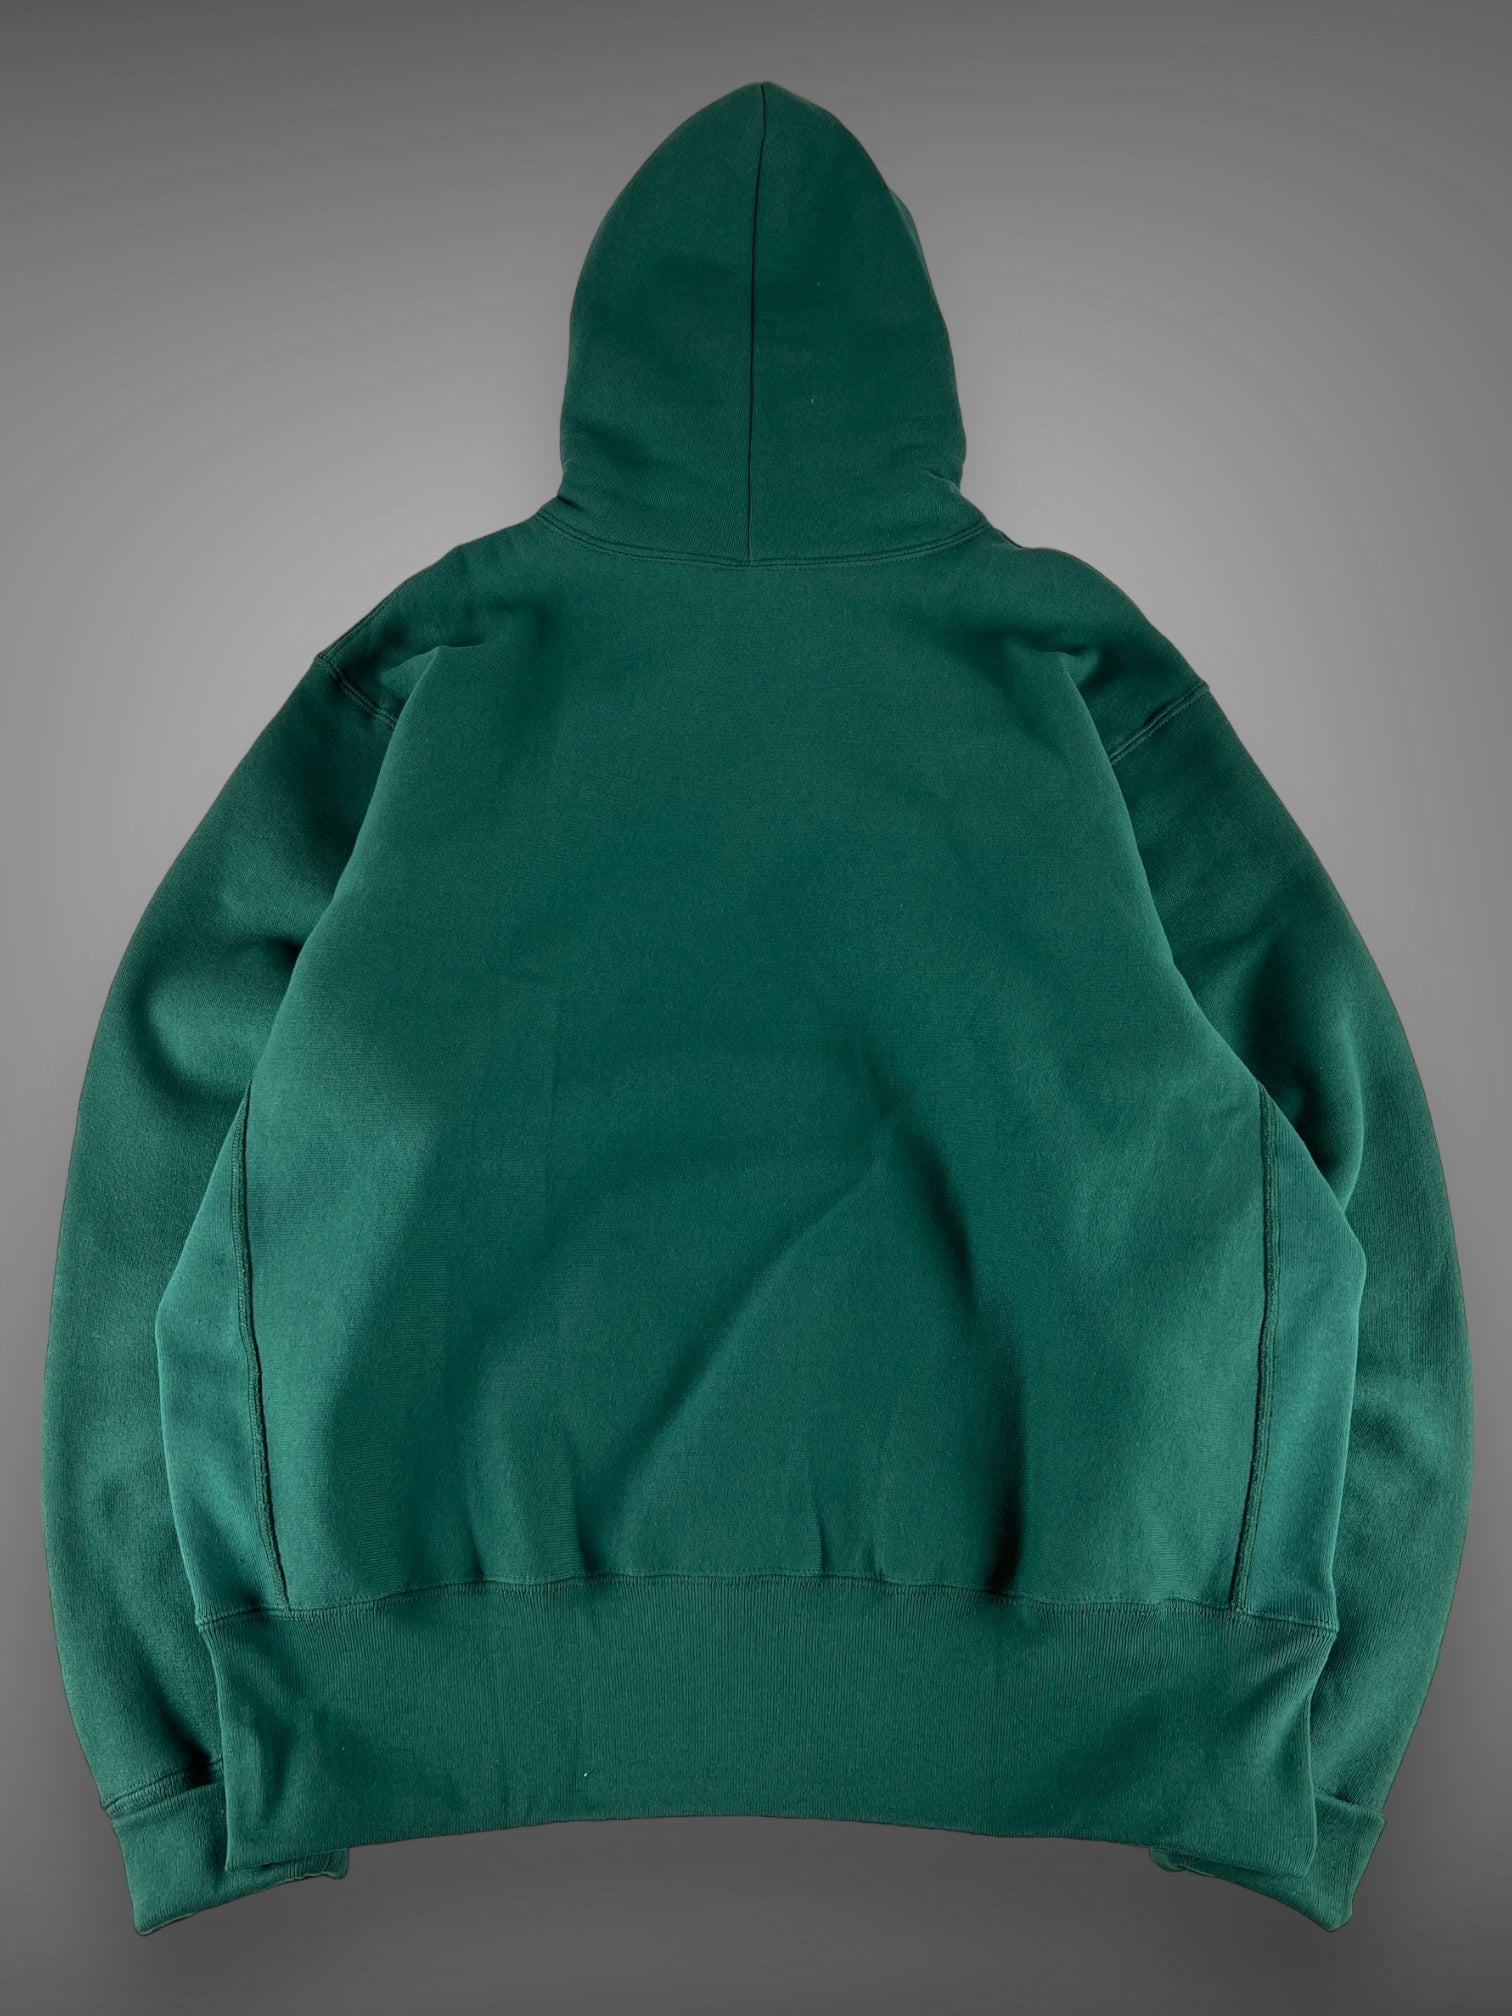 Deadstock Camber dark green hooded sweatshirt L